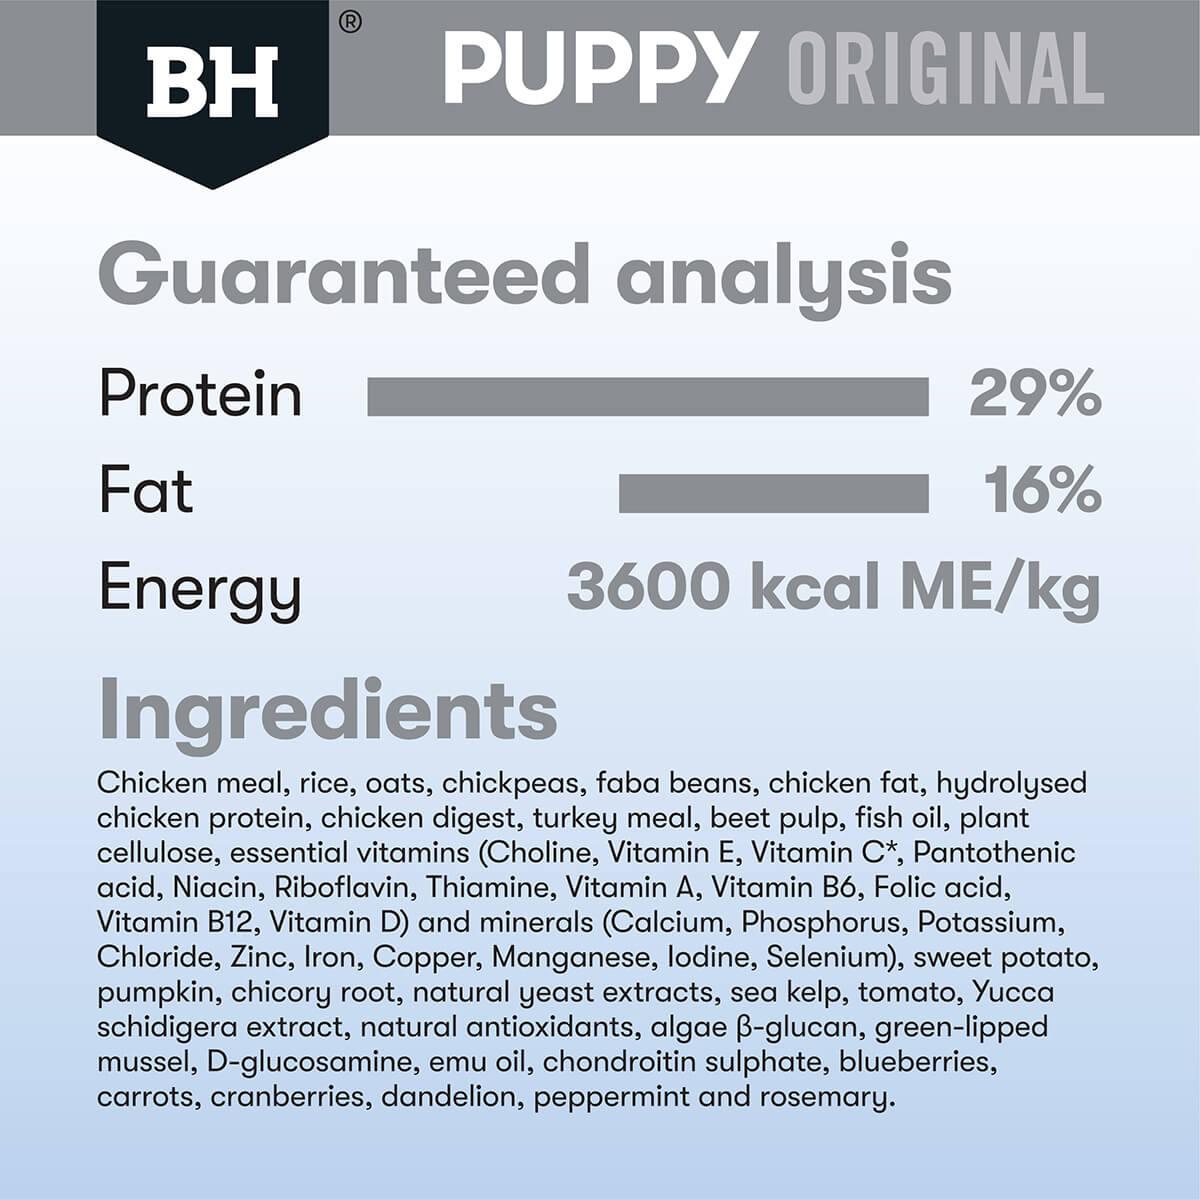 Black Hawk Puppy Chicken & Rice Large Breed Dry Dog Food